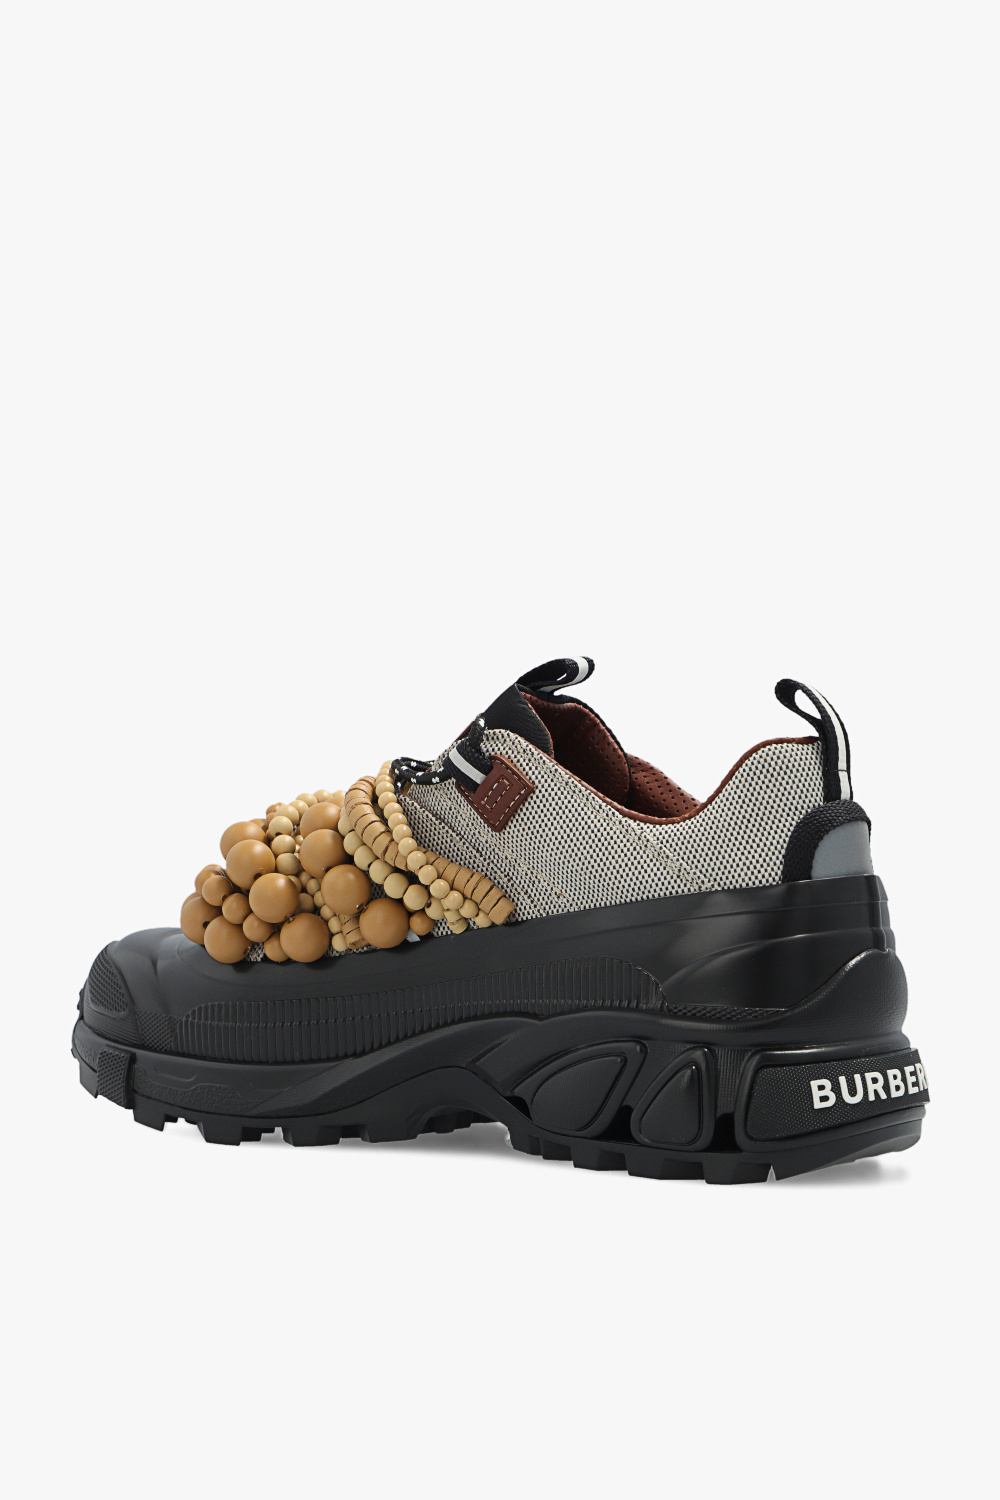 burberry brown ‘Arthur’ sneakers